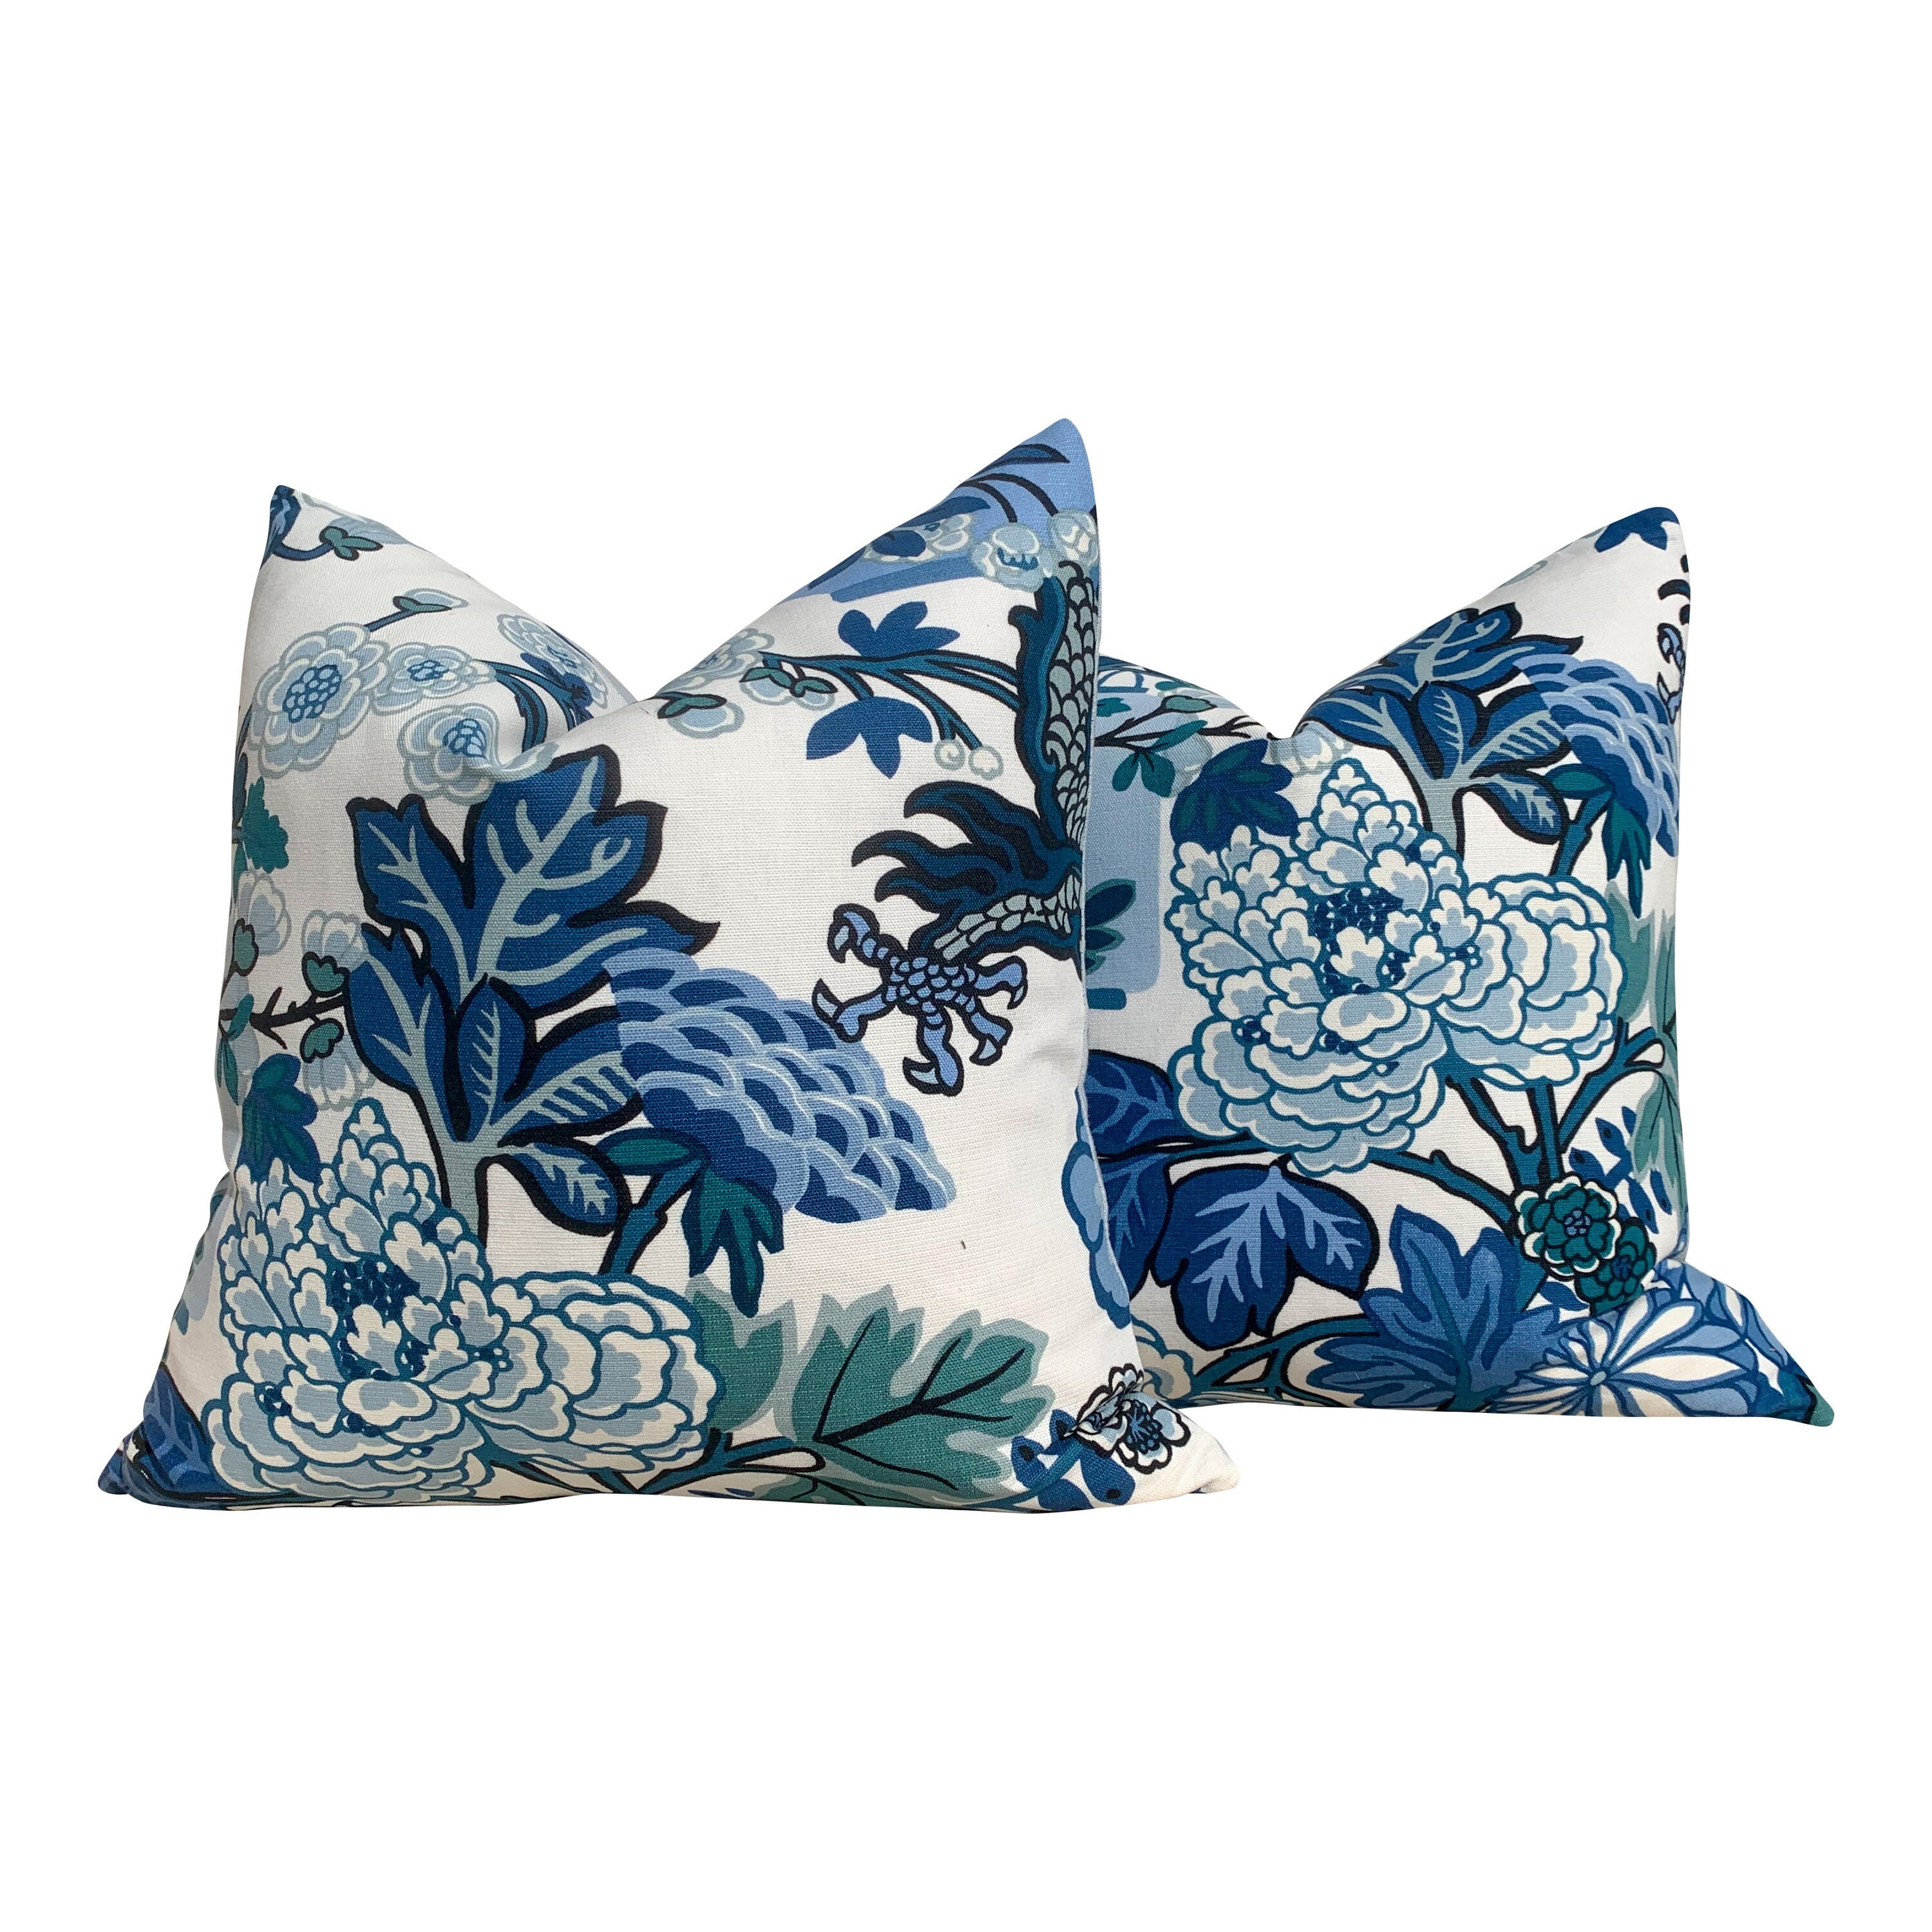 Schumacher Chang Mai Dragon Pillow, Blue. Decorative Floral Asian Lumbar Linen Pillow,China Blue. Designer pillows, accent cushion cover